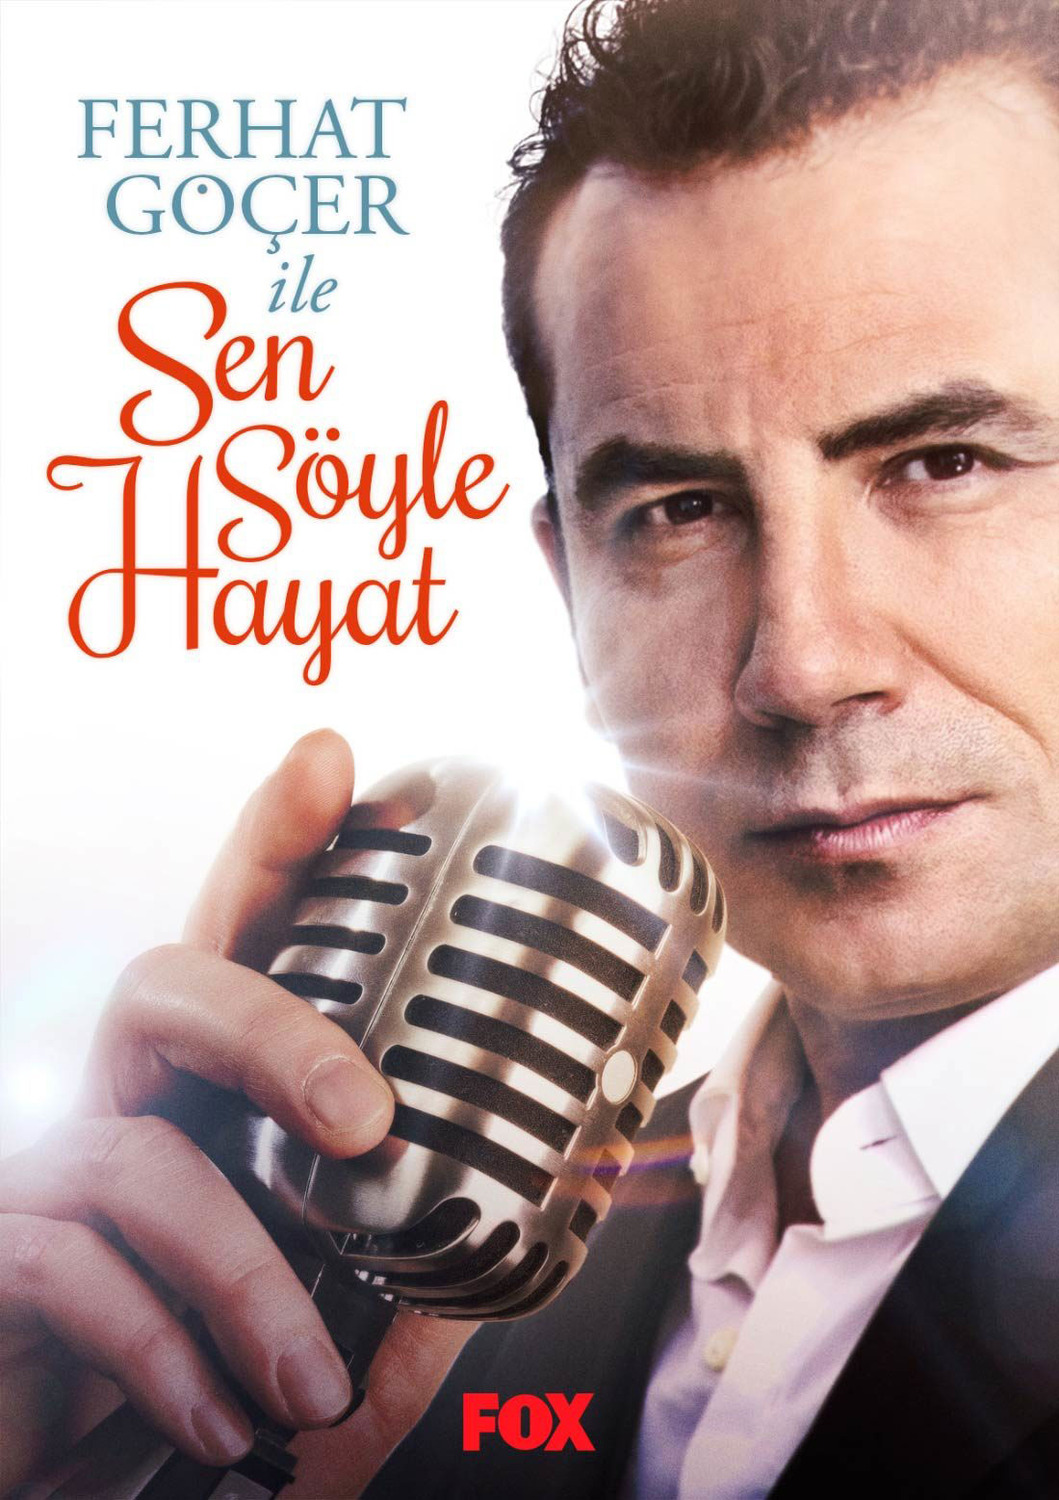 Extra Large TV Poster Image for Ferhat Göçer ile Sen Söyle Hayat 